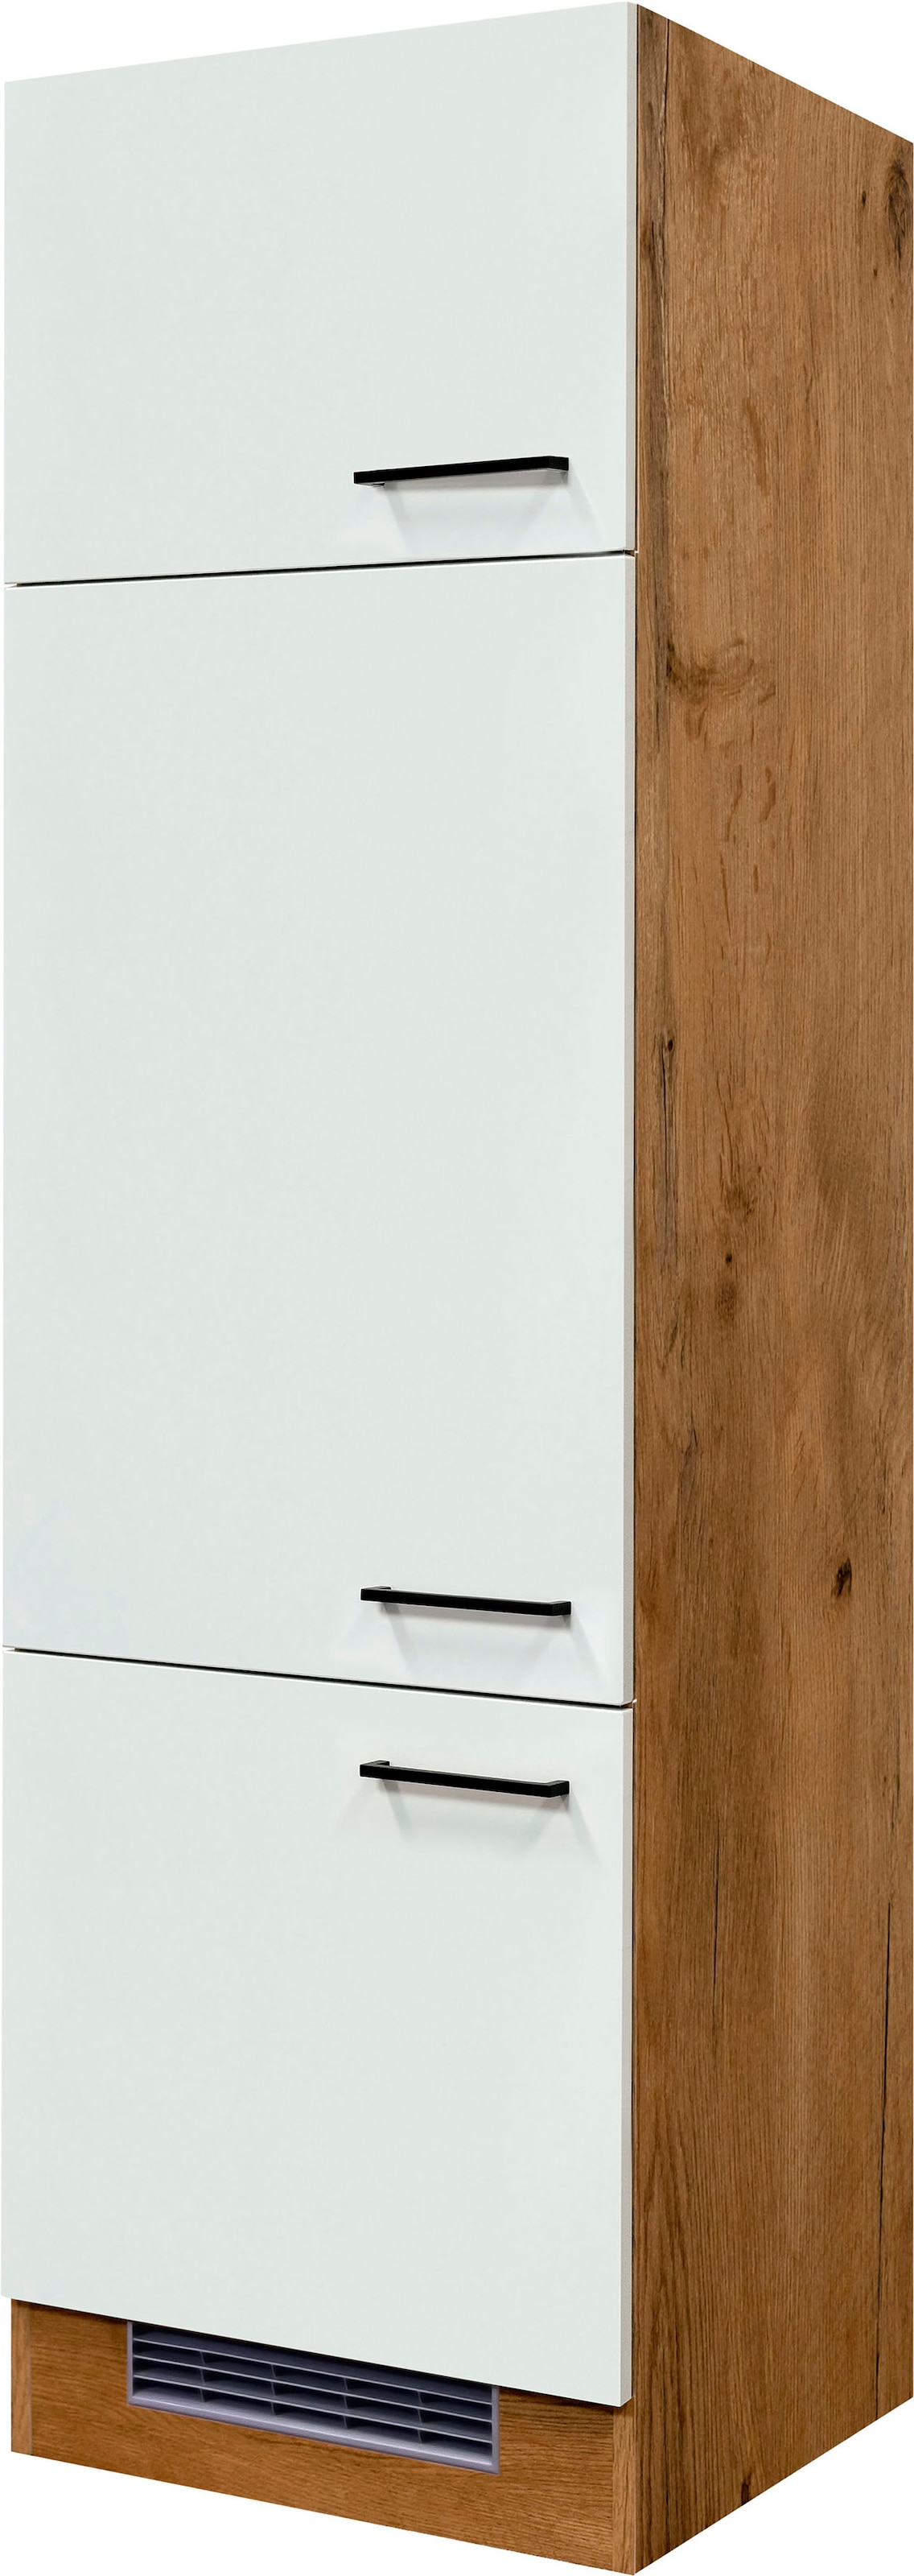 Flex-Well Küche "Vintea", 60 cm breit, 200 cm hoch, inklusive Kühlschrank